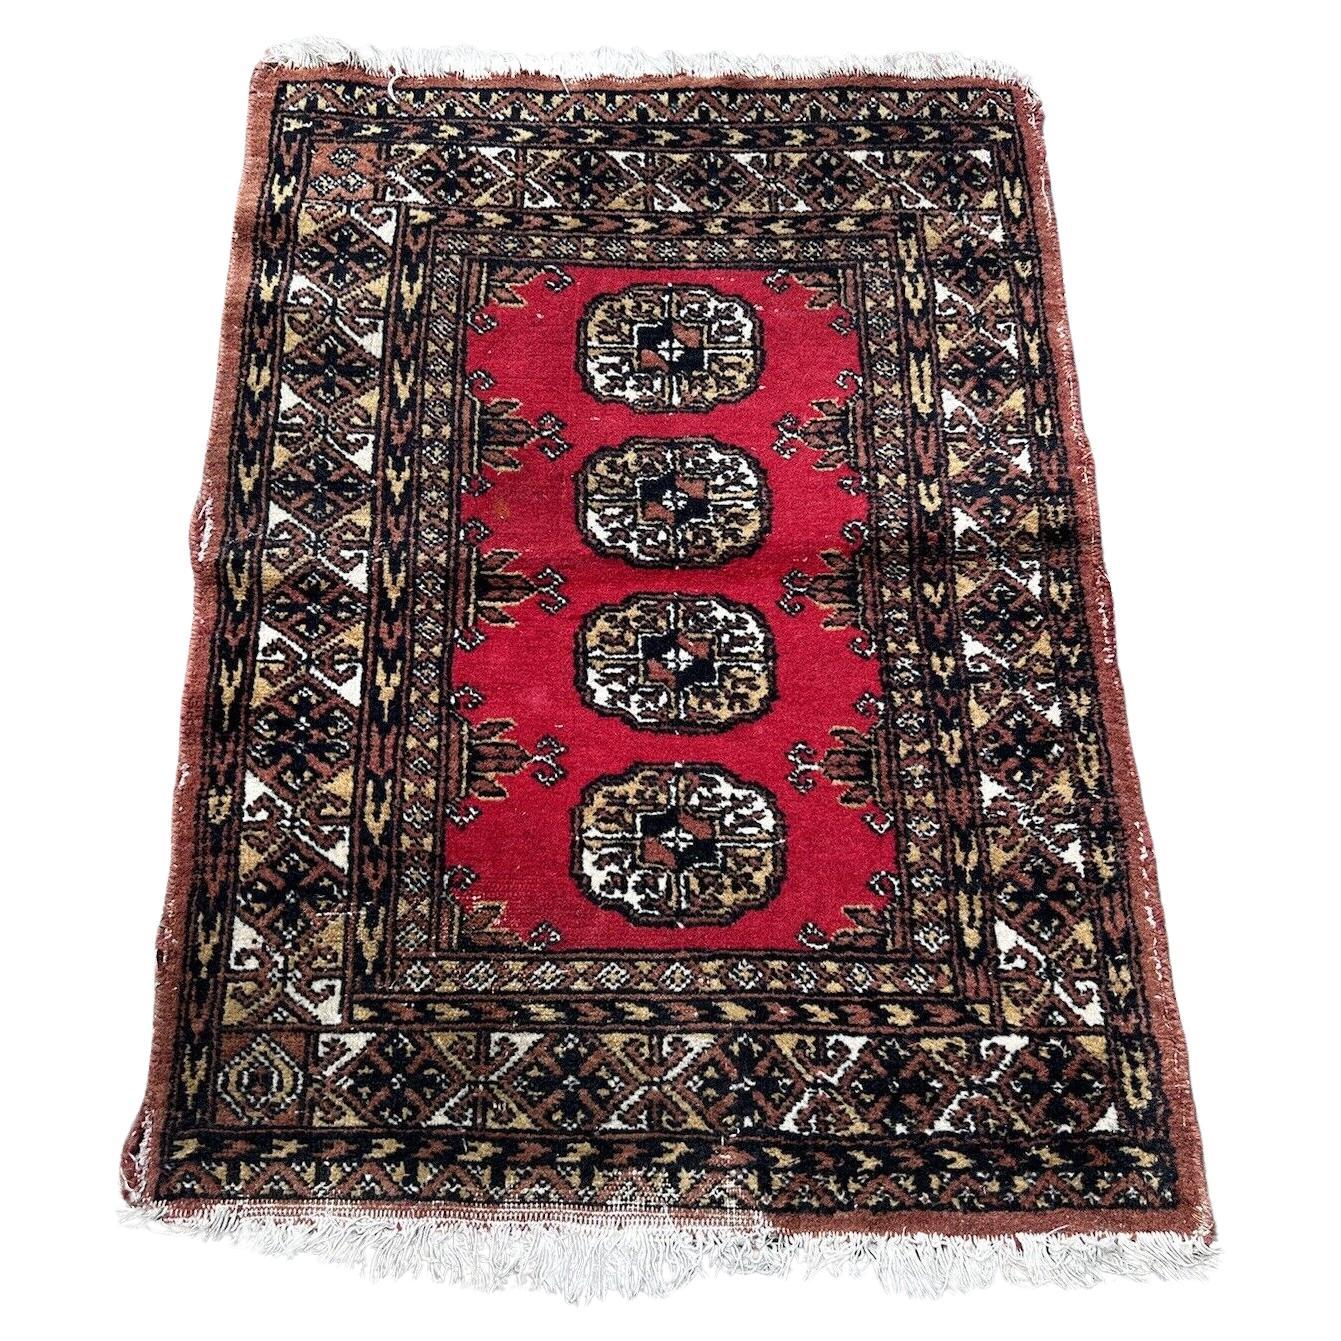 Handmade Vintage Uzbek Bukhara Rug 2.1' x 3', 1960s - 1S25 For Sale